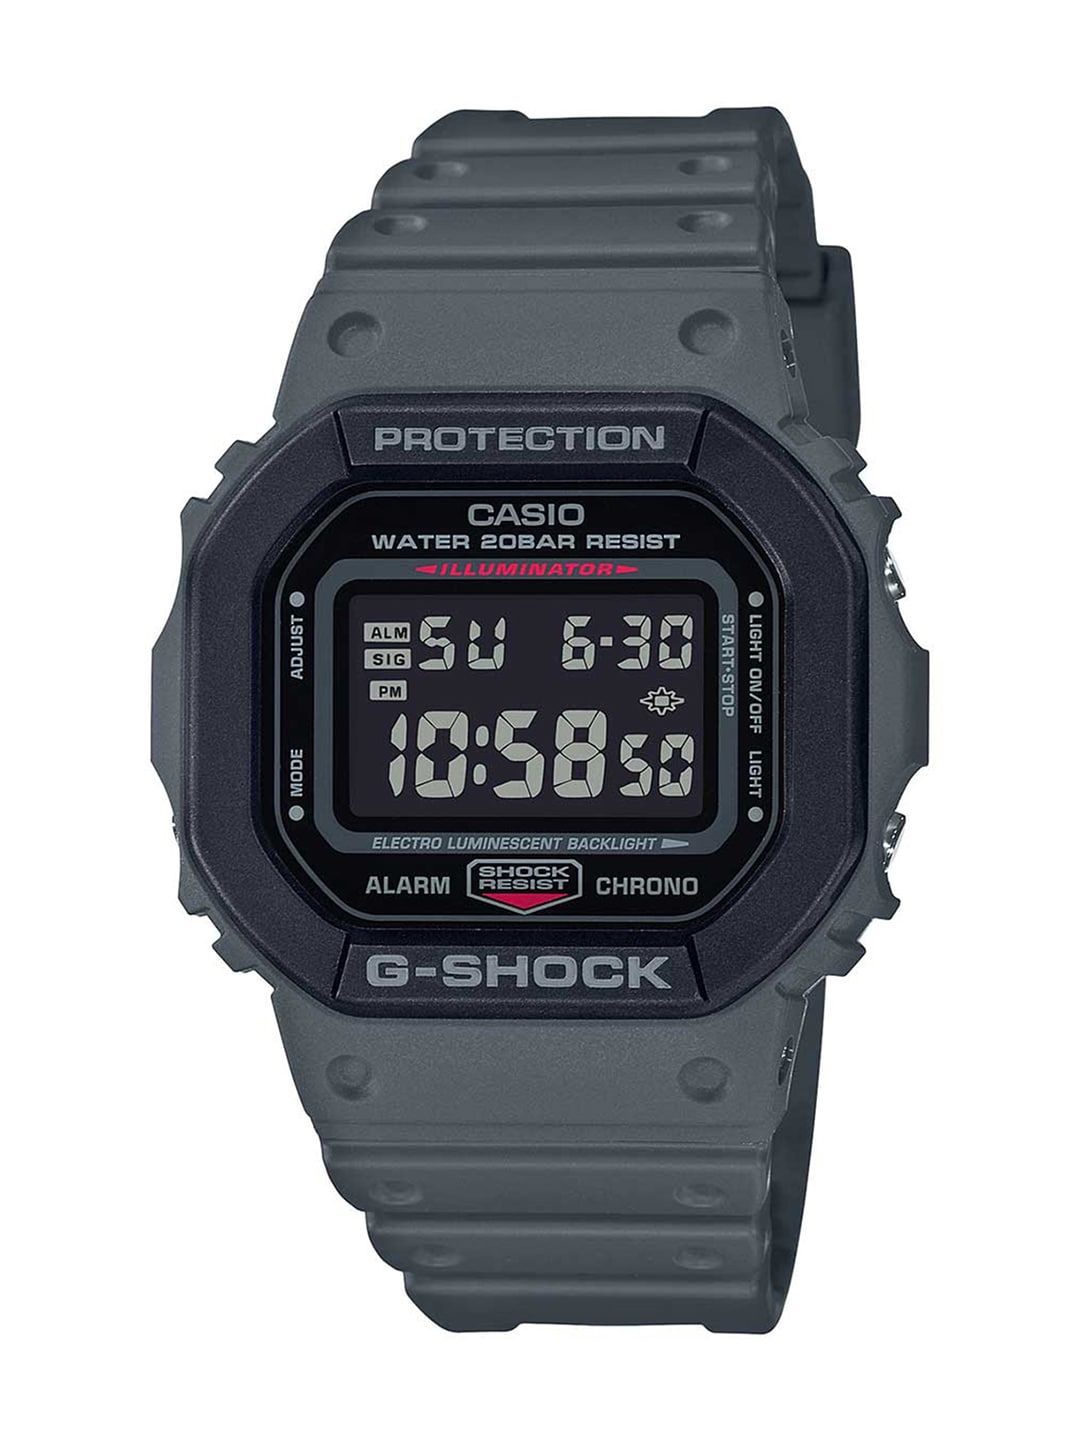 CASIO Unisex Black & Grey Digital Watch G1016 Price in India